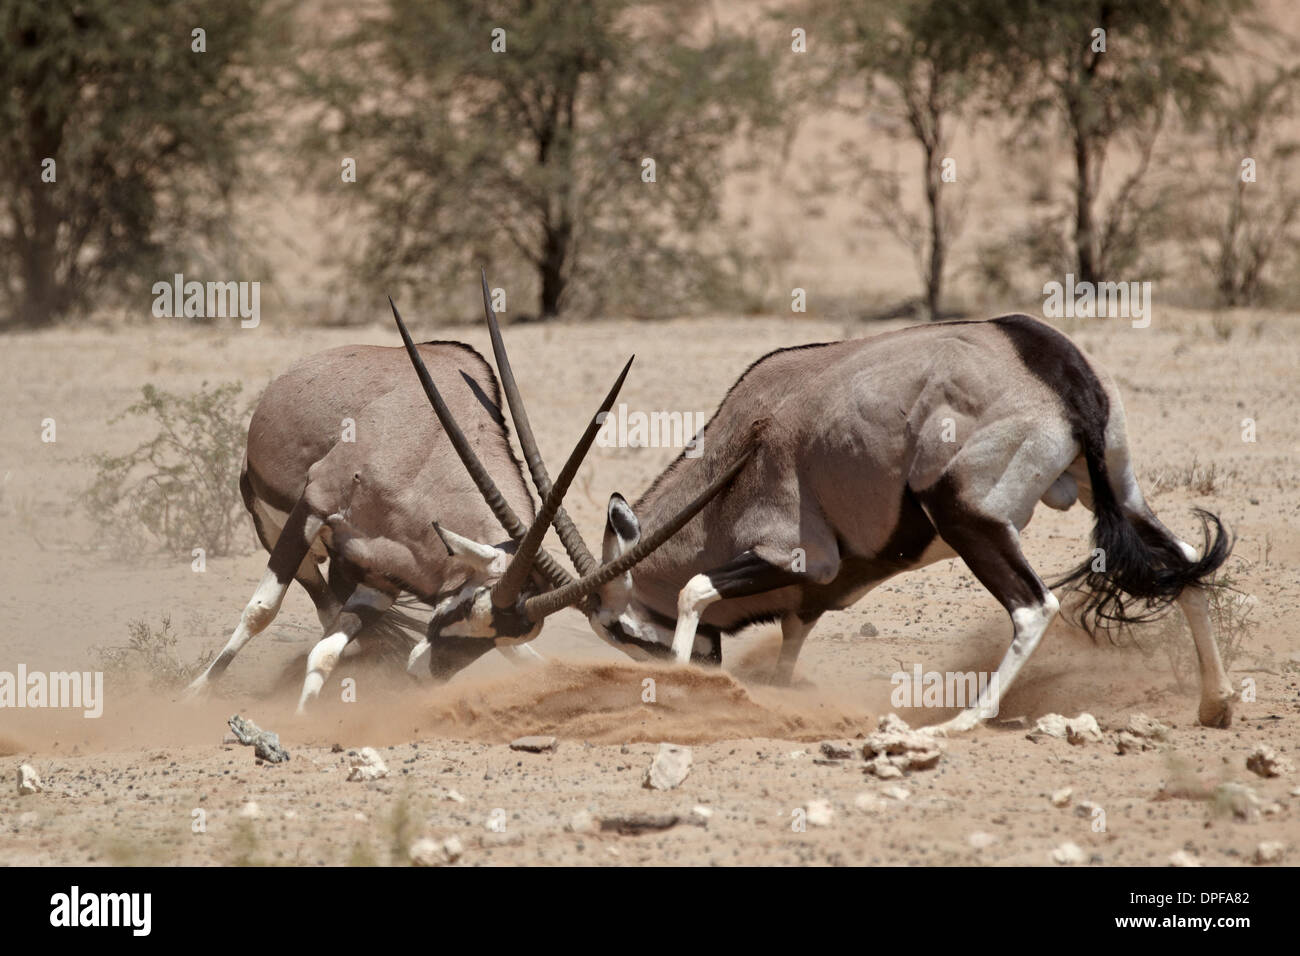 Two gemsbok (South African oryx) (Oryx gazella) fighting, Kgalagadi Transfrontier Park, South Africa Stock Photo